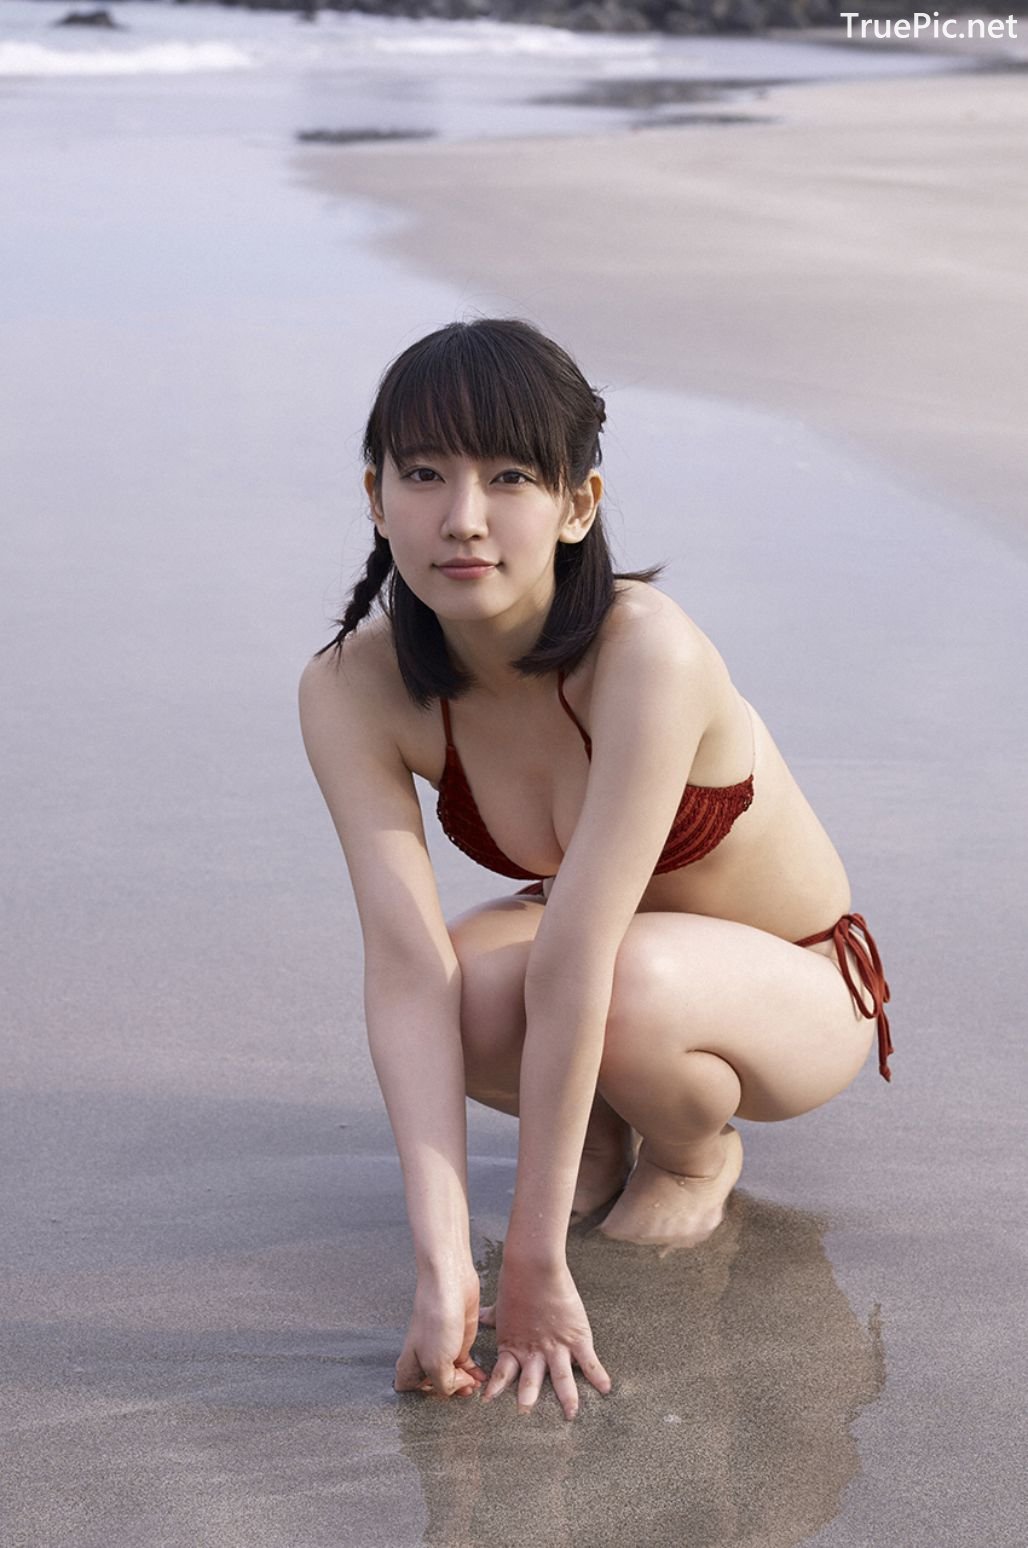 Image-Japanese-Actress-And-Model-Riho-Yoshioka-Pure-Beauty-Of-Sea-Goddess-TruePic.net- Picture-156